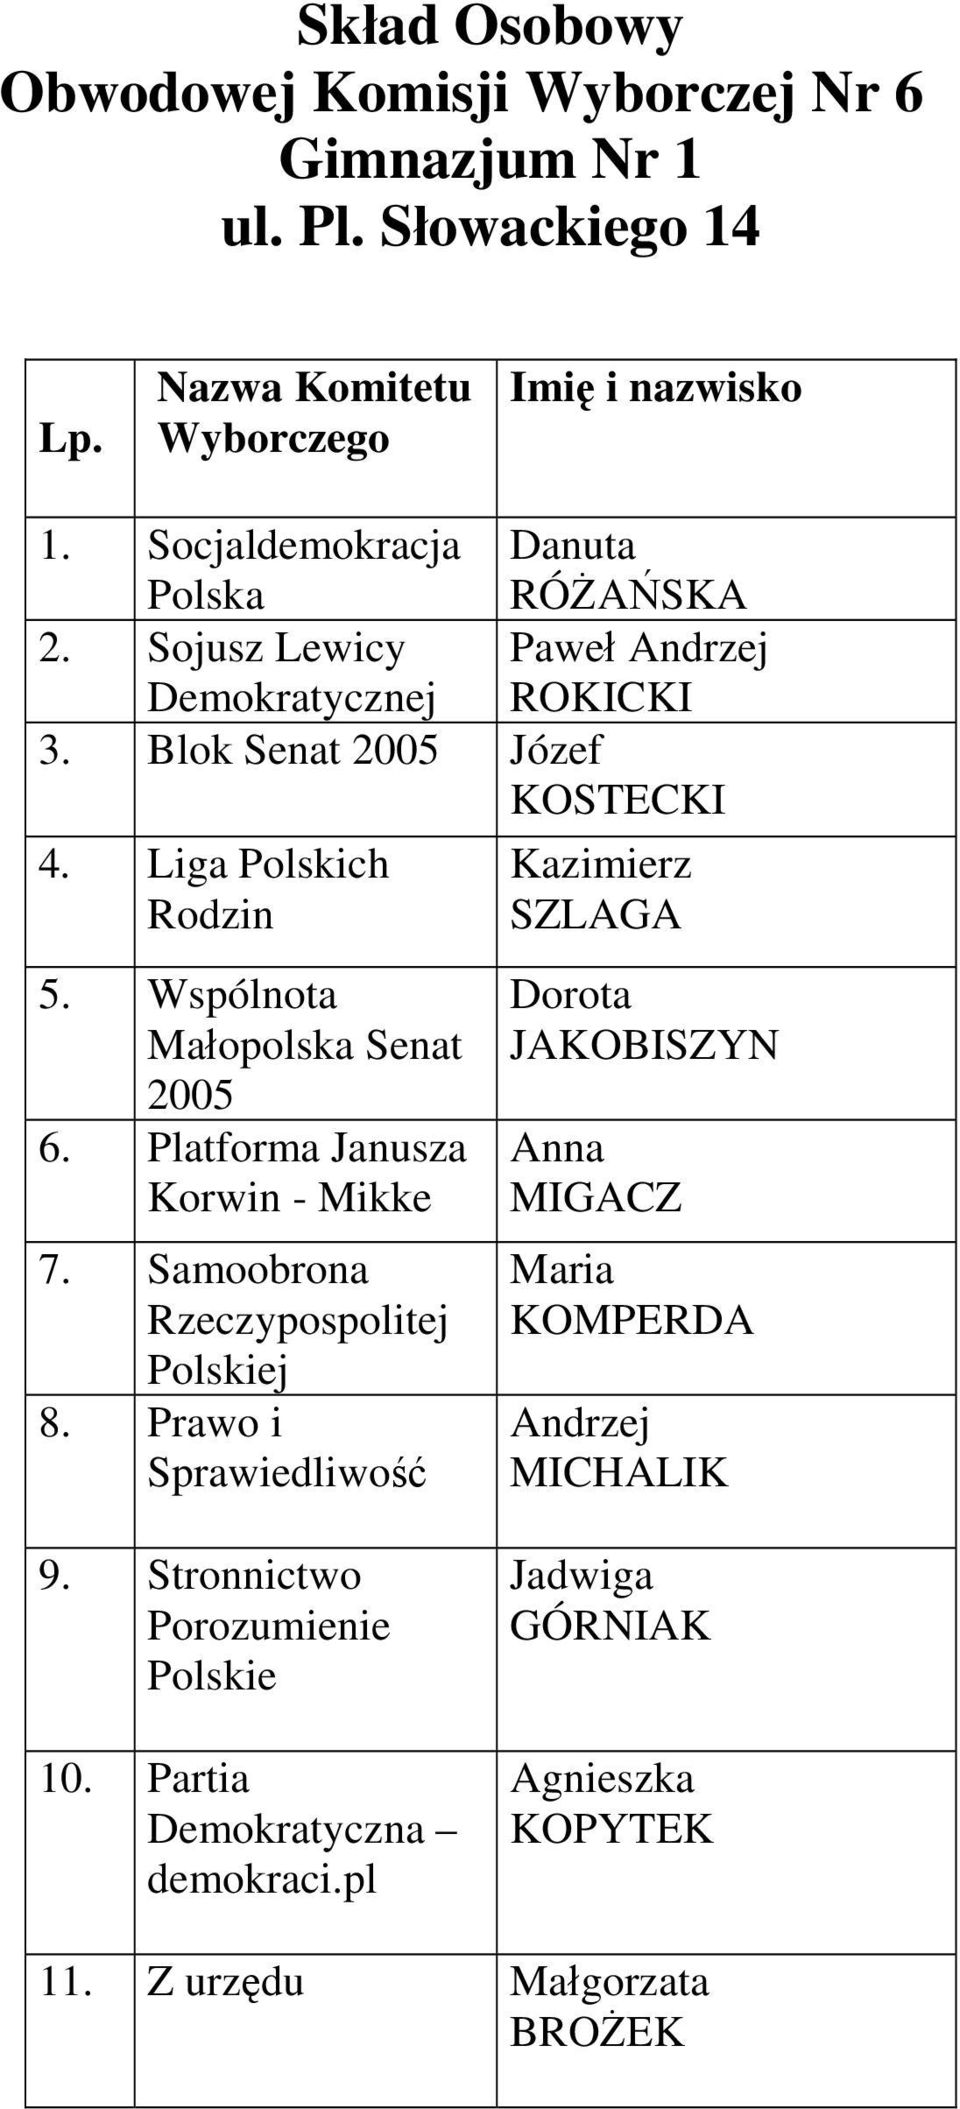 Liga Polskich 5. Wspólnota 6. Platforma Janusza Korwin - Mikke 7. Samoobrona 8.